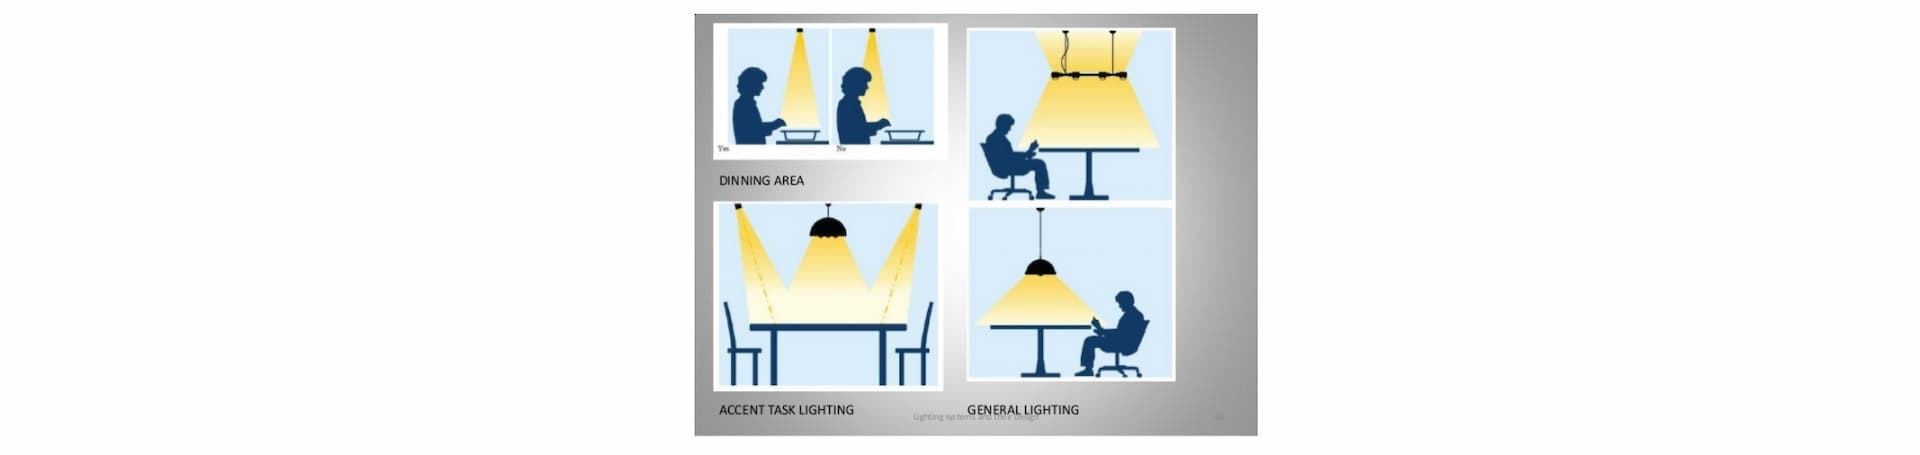 Types of lighting